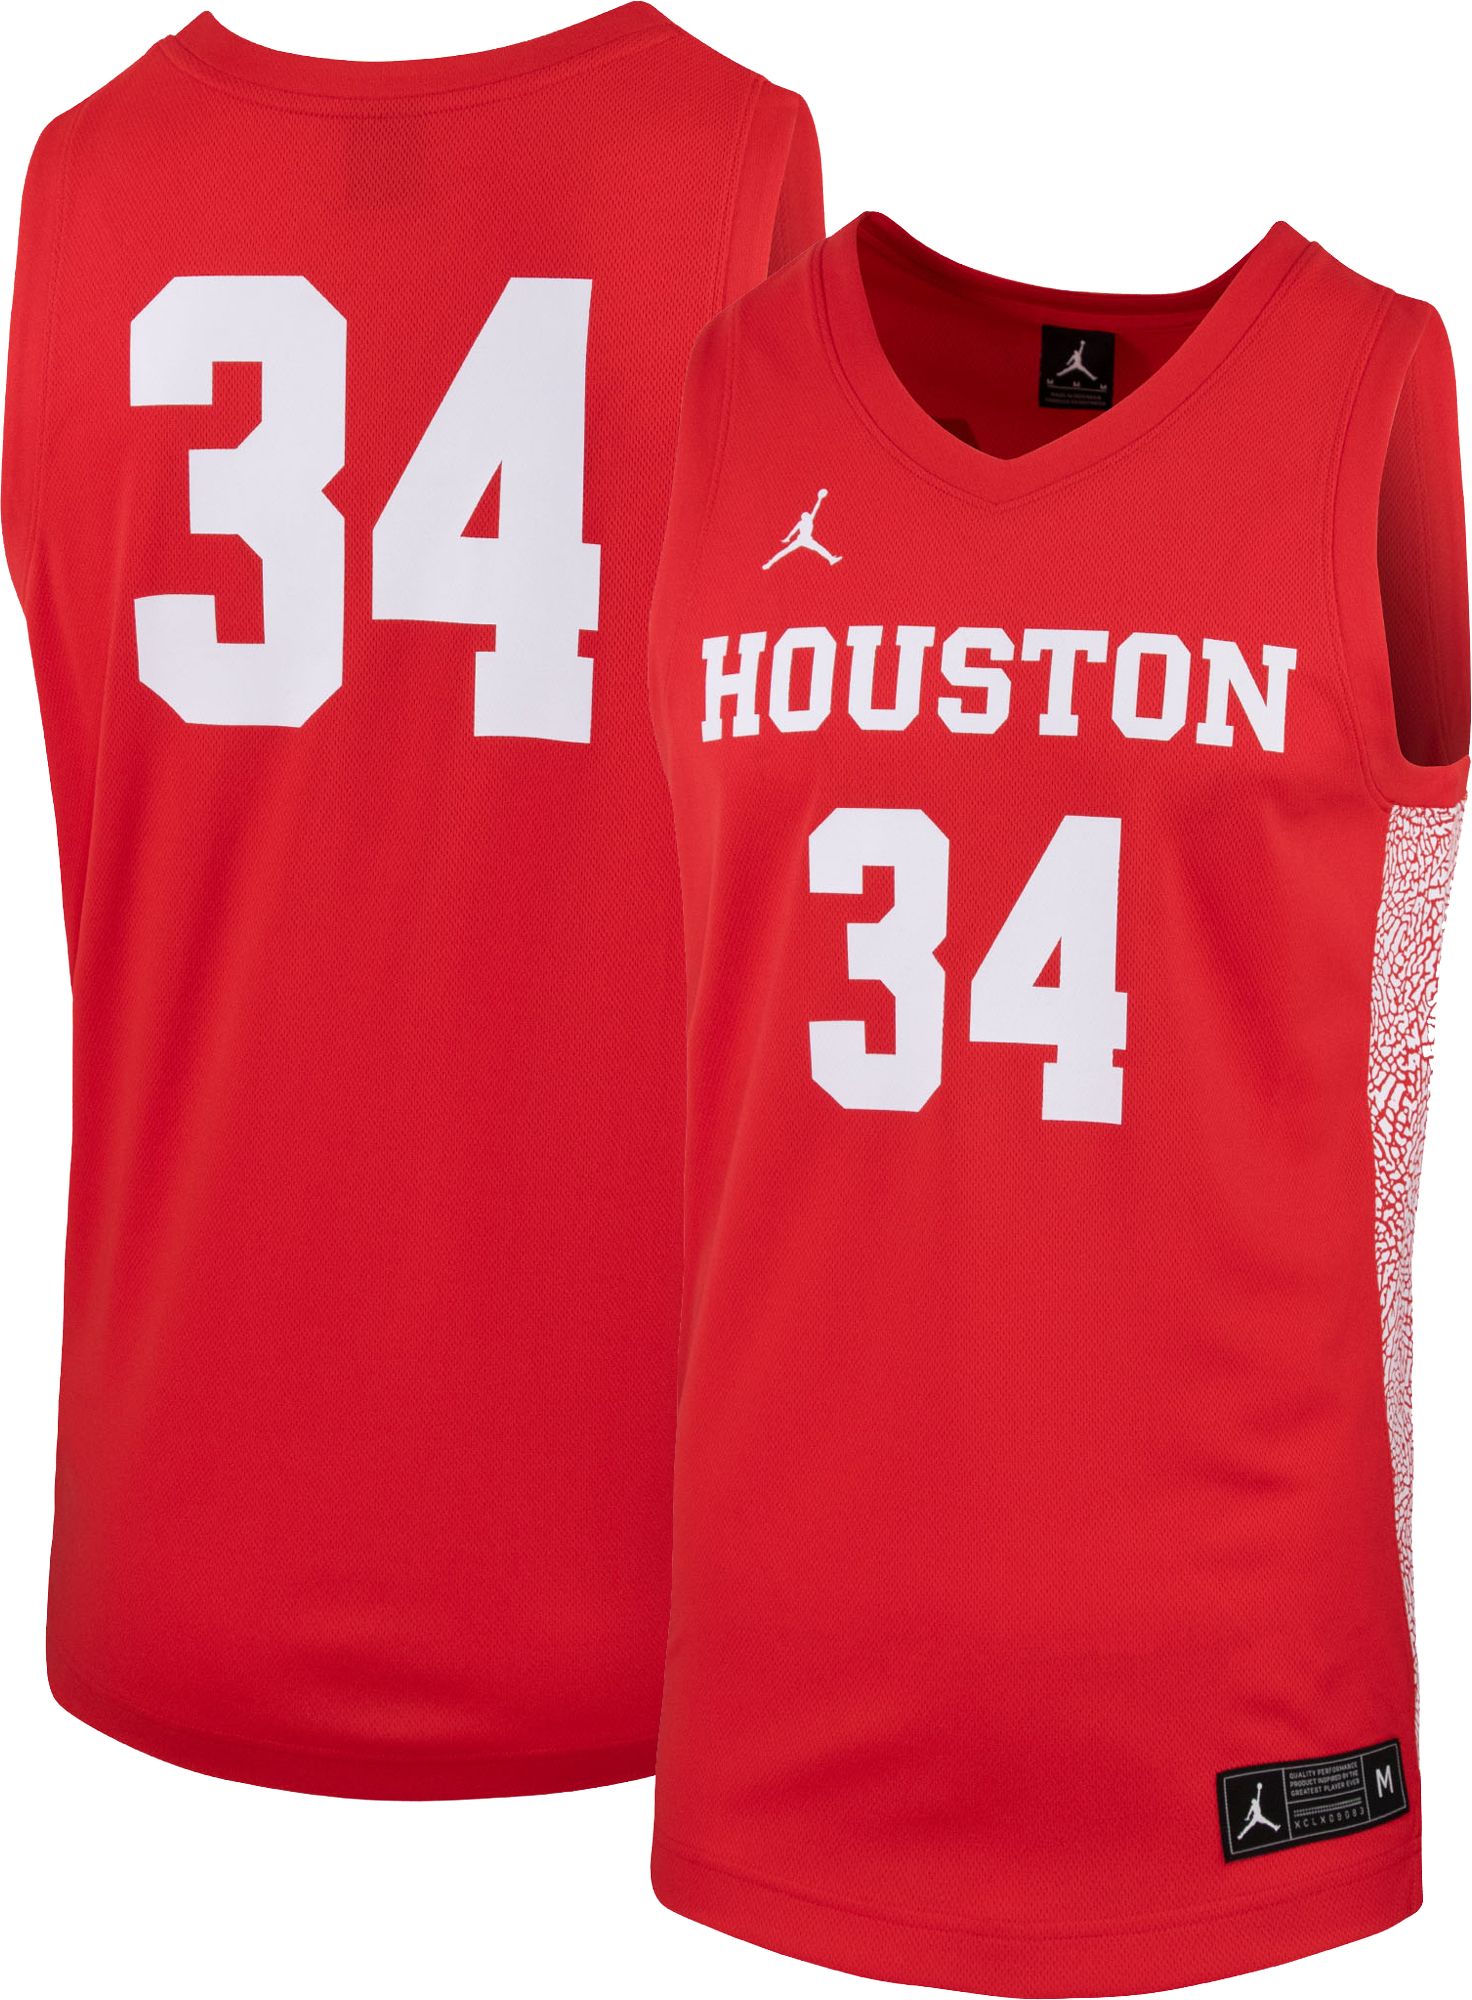 houston cougars basketball jersey